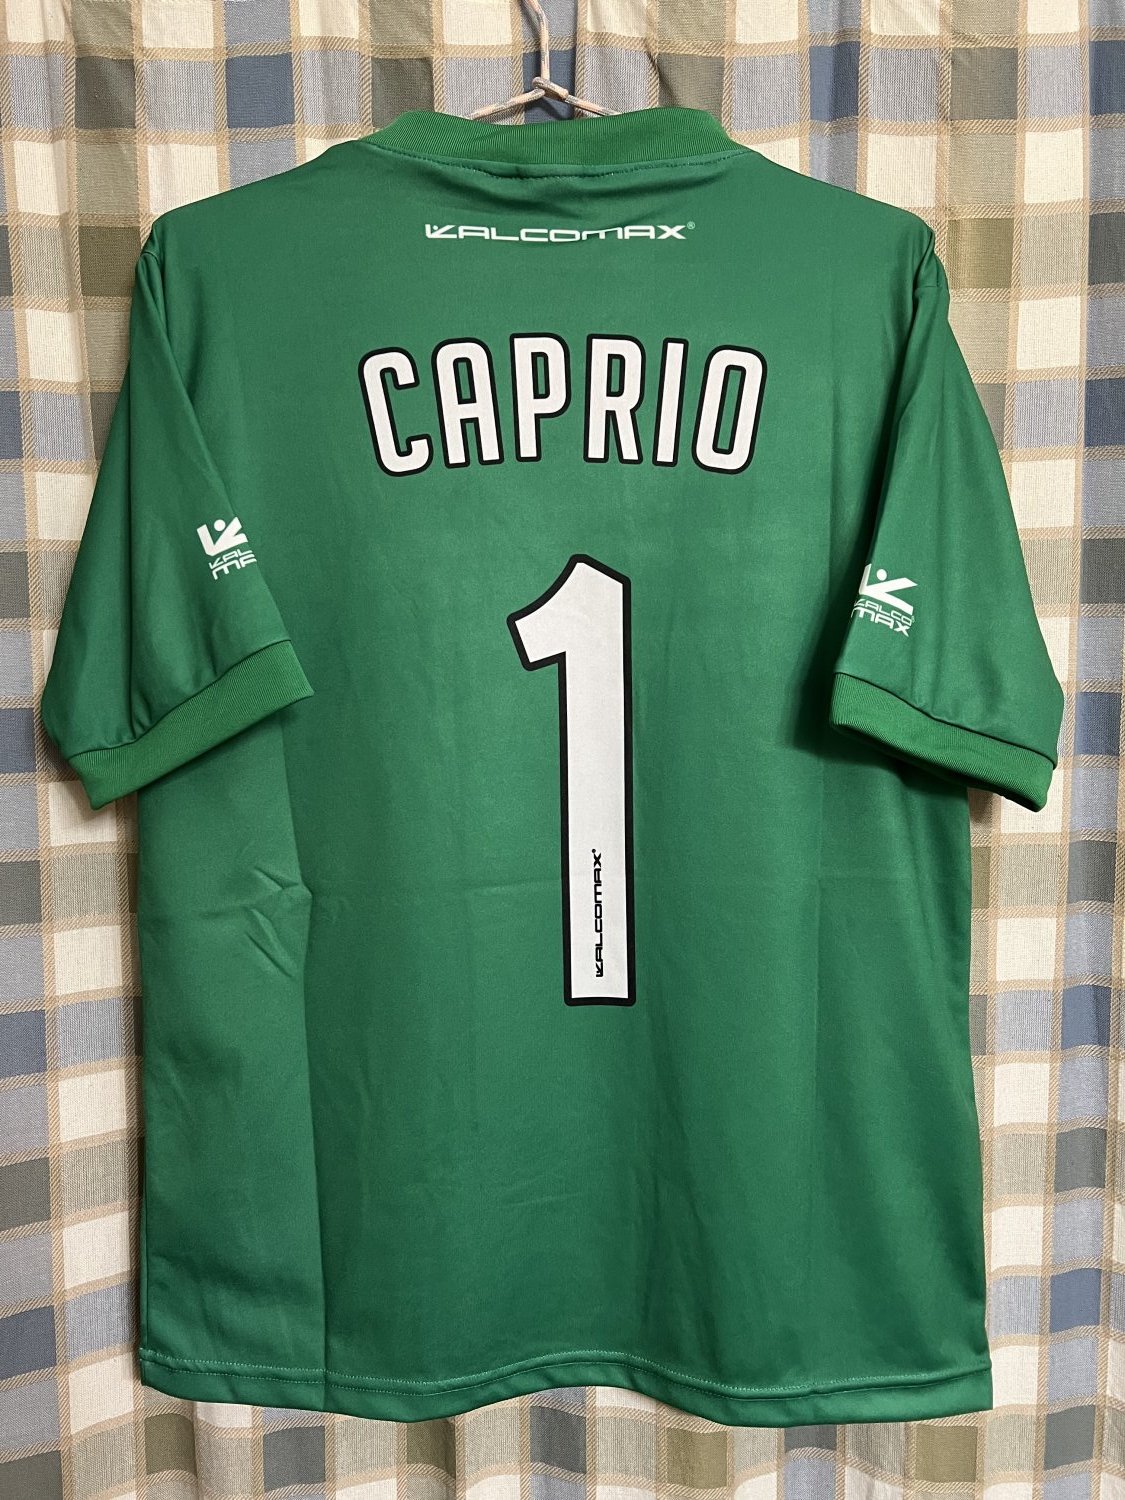 Club Ferro Carril Oeste Goalkeeper football shirt 2018 - 2019.